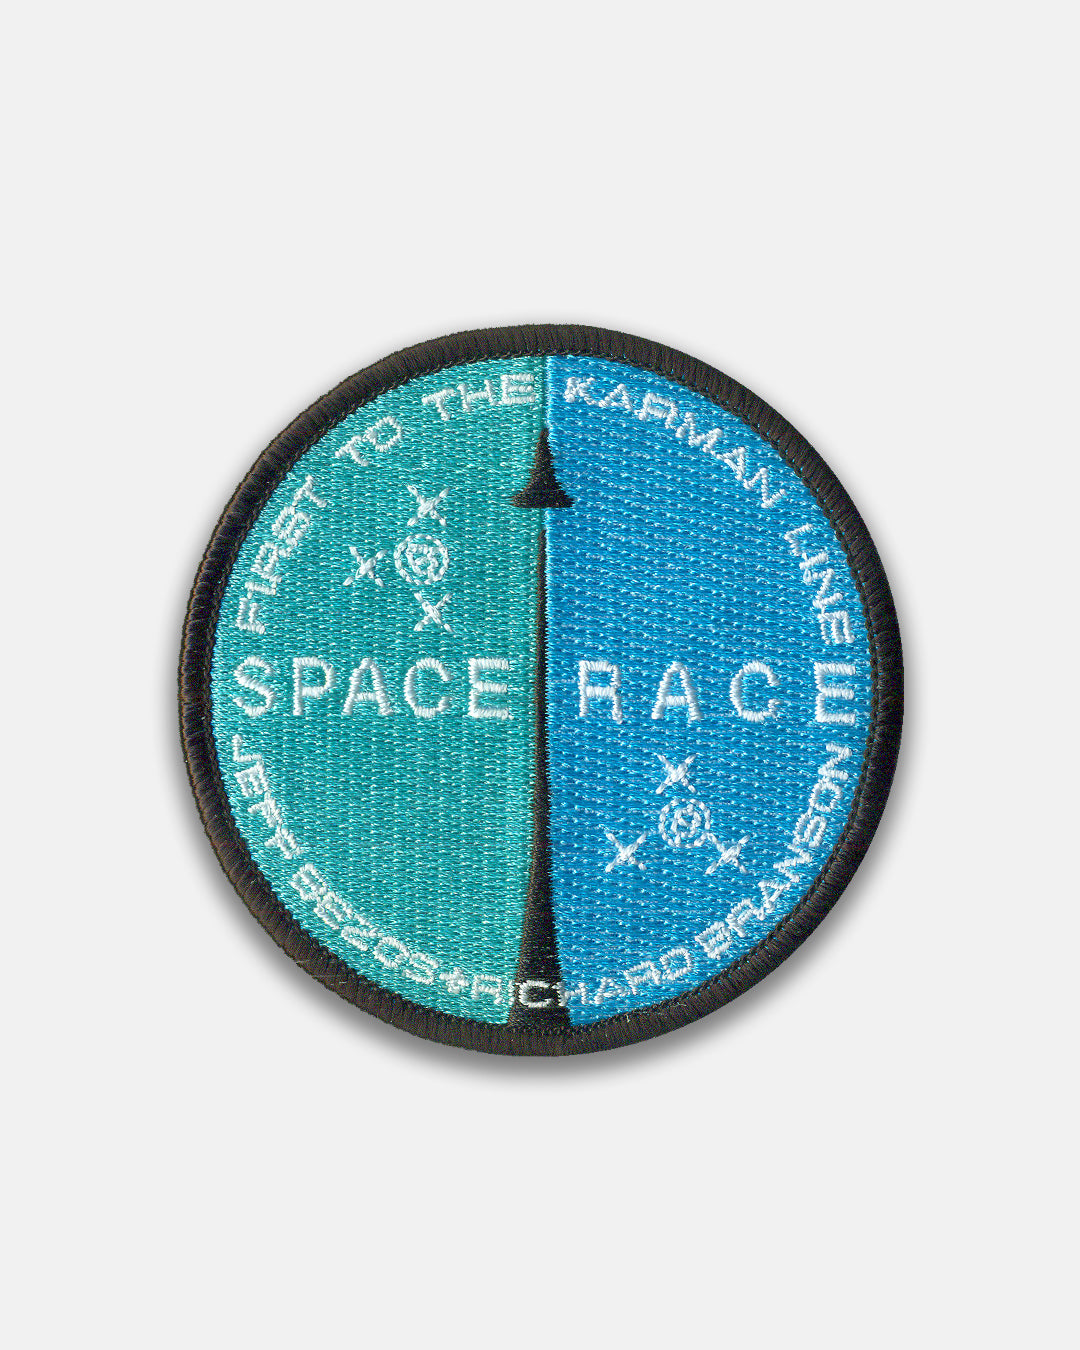 SPACE RACE MISSION PATCH